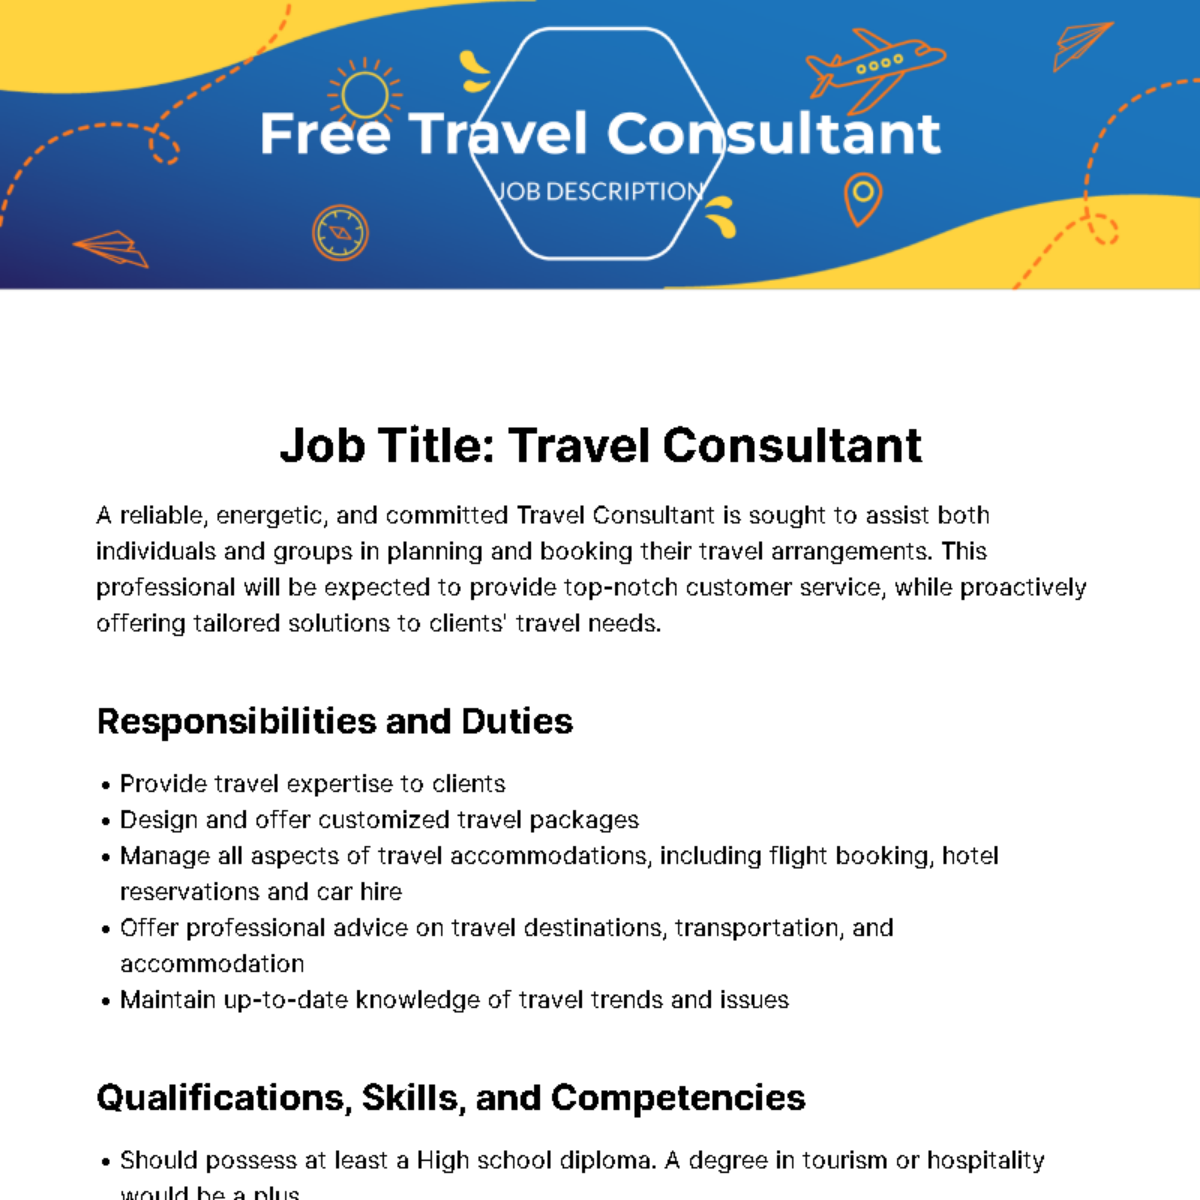 Free Travel Consultant Job Description Template